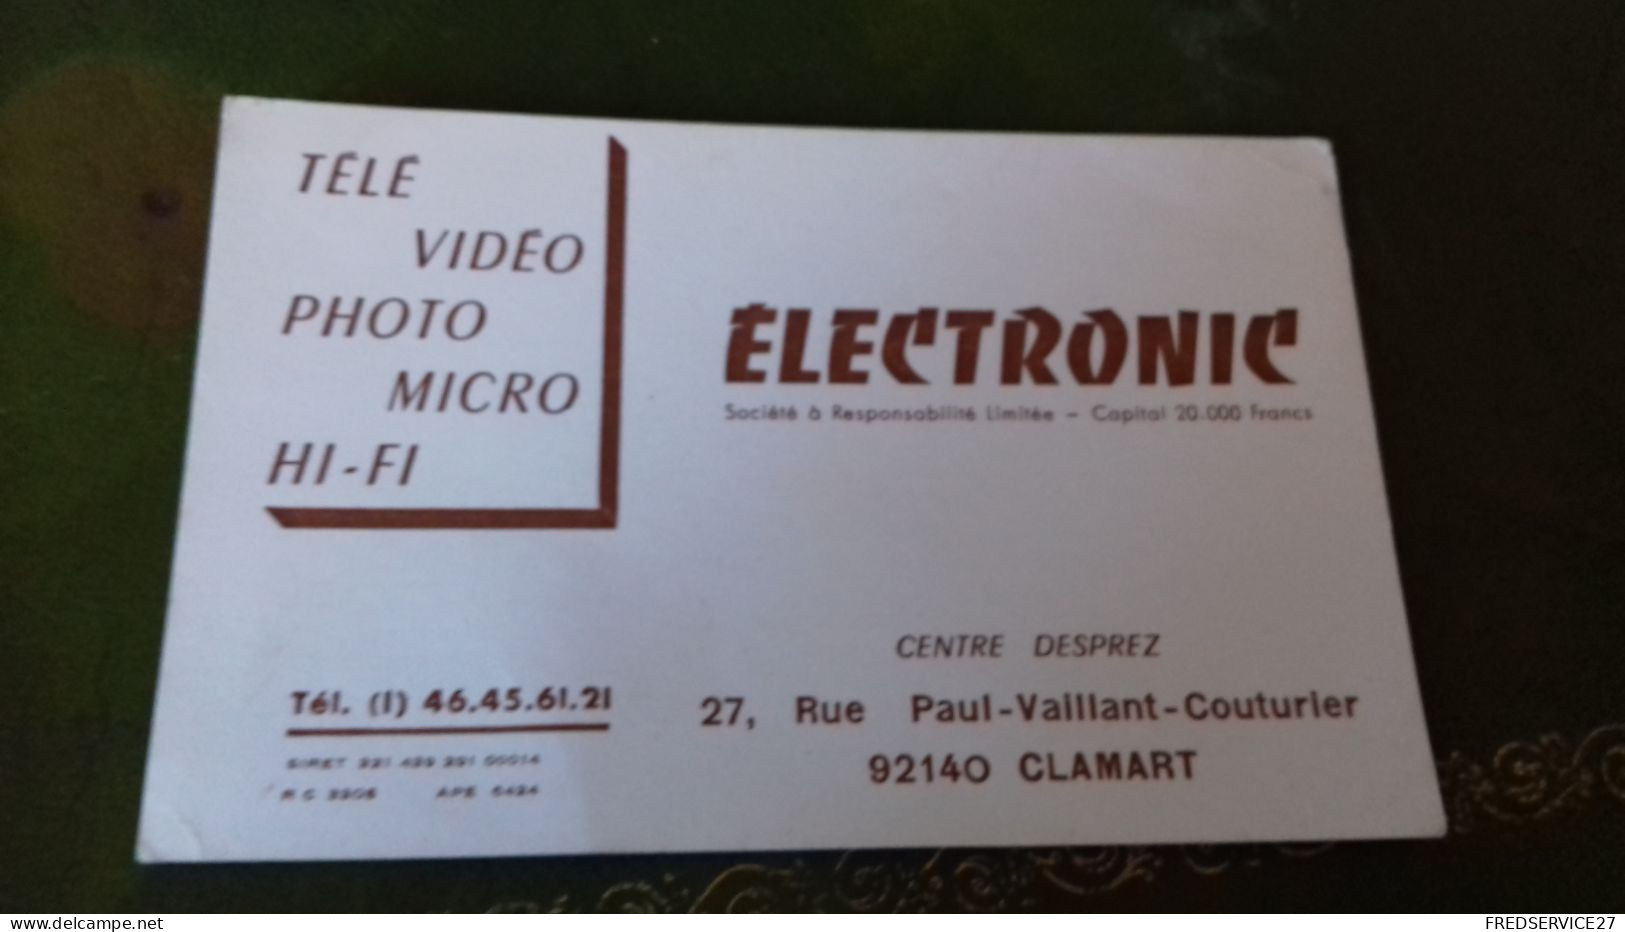 236/ CARTE DE VISITE ELECTRONIC CENTRE DESPRET CLAMART 92140 - Visitekaartjes